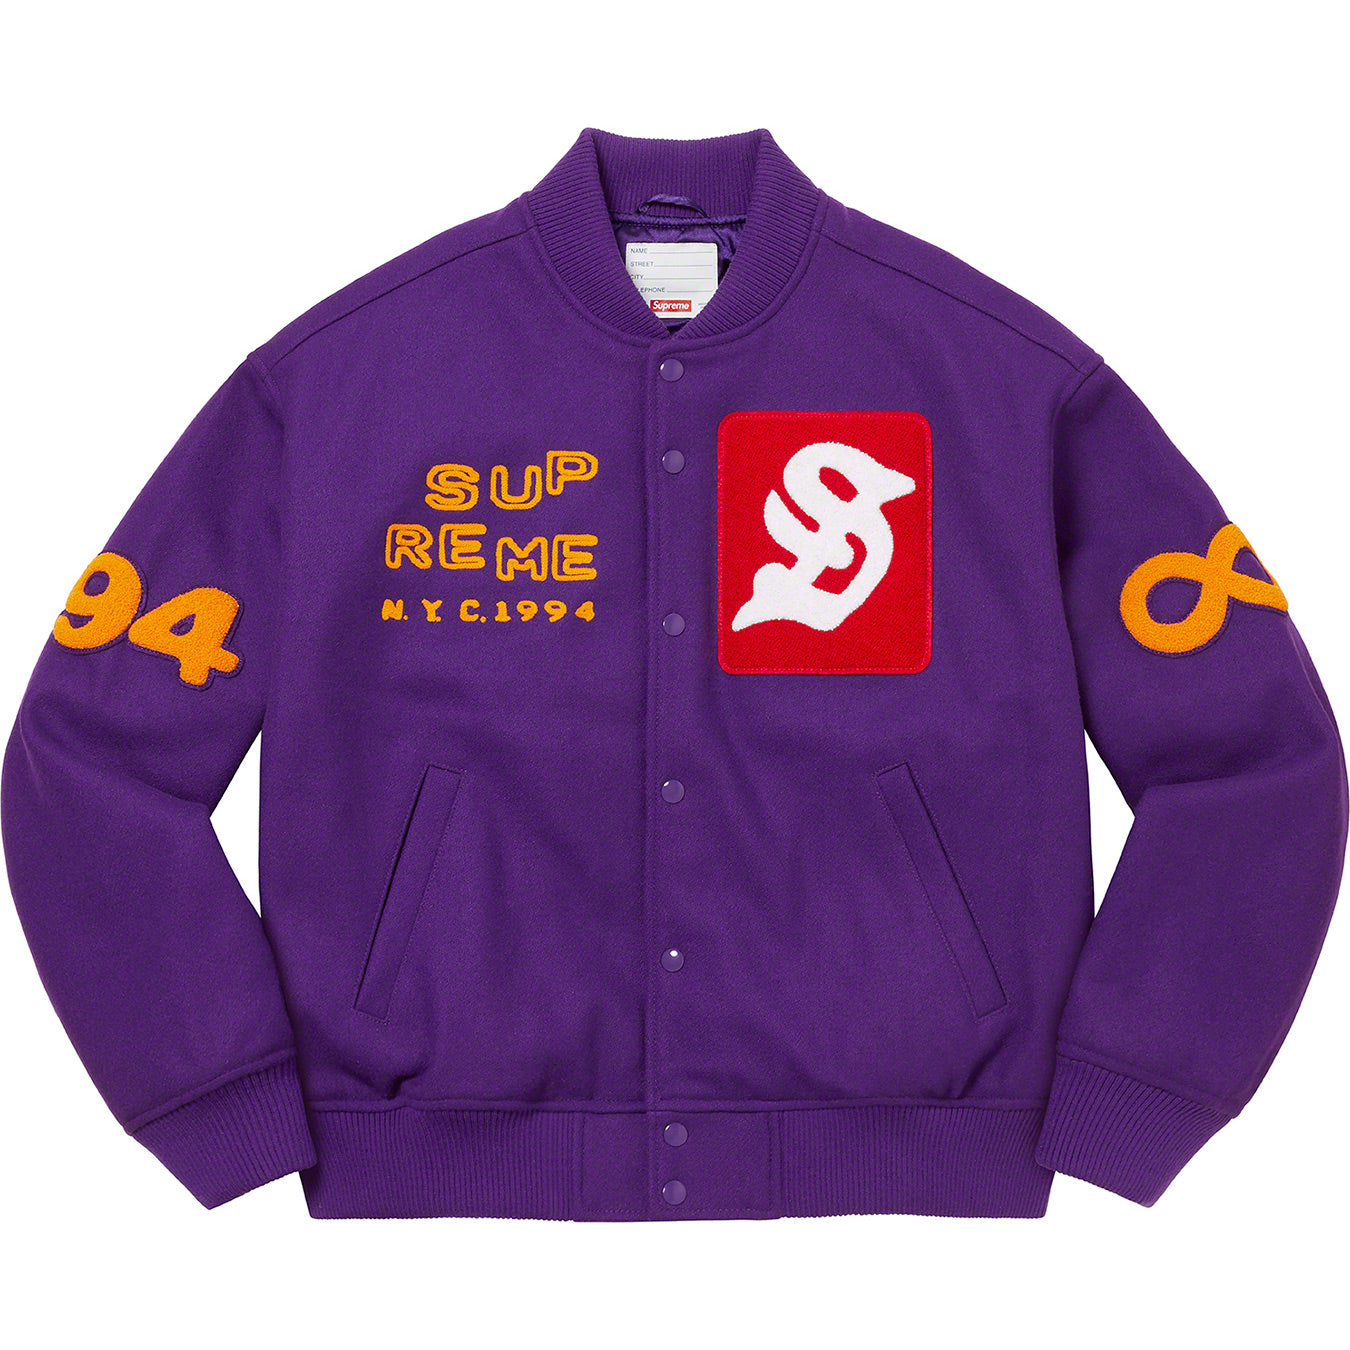 Baseball Purple Satin Varsity Jacket - 2023